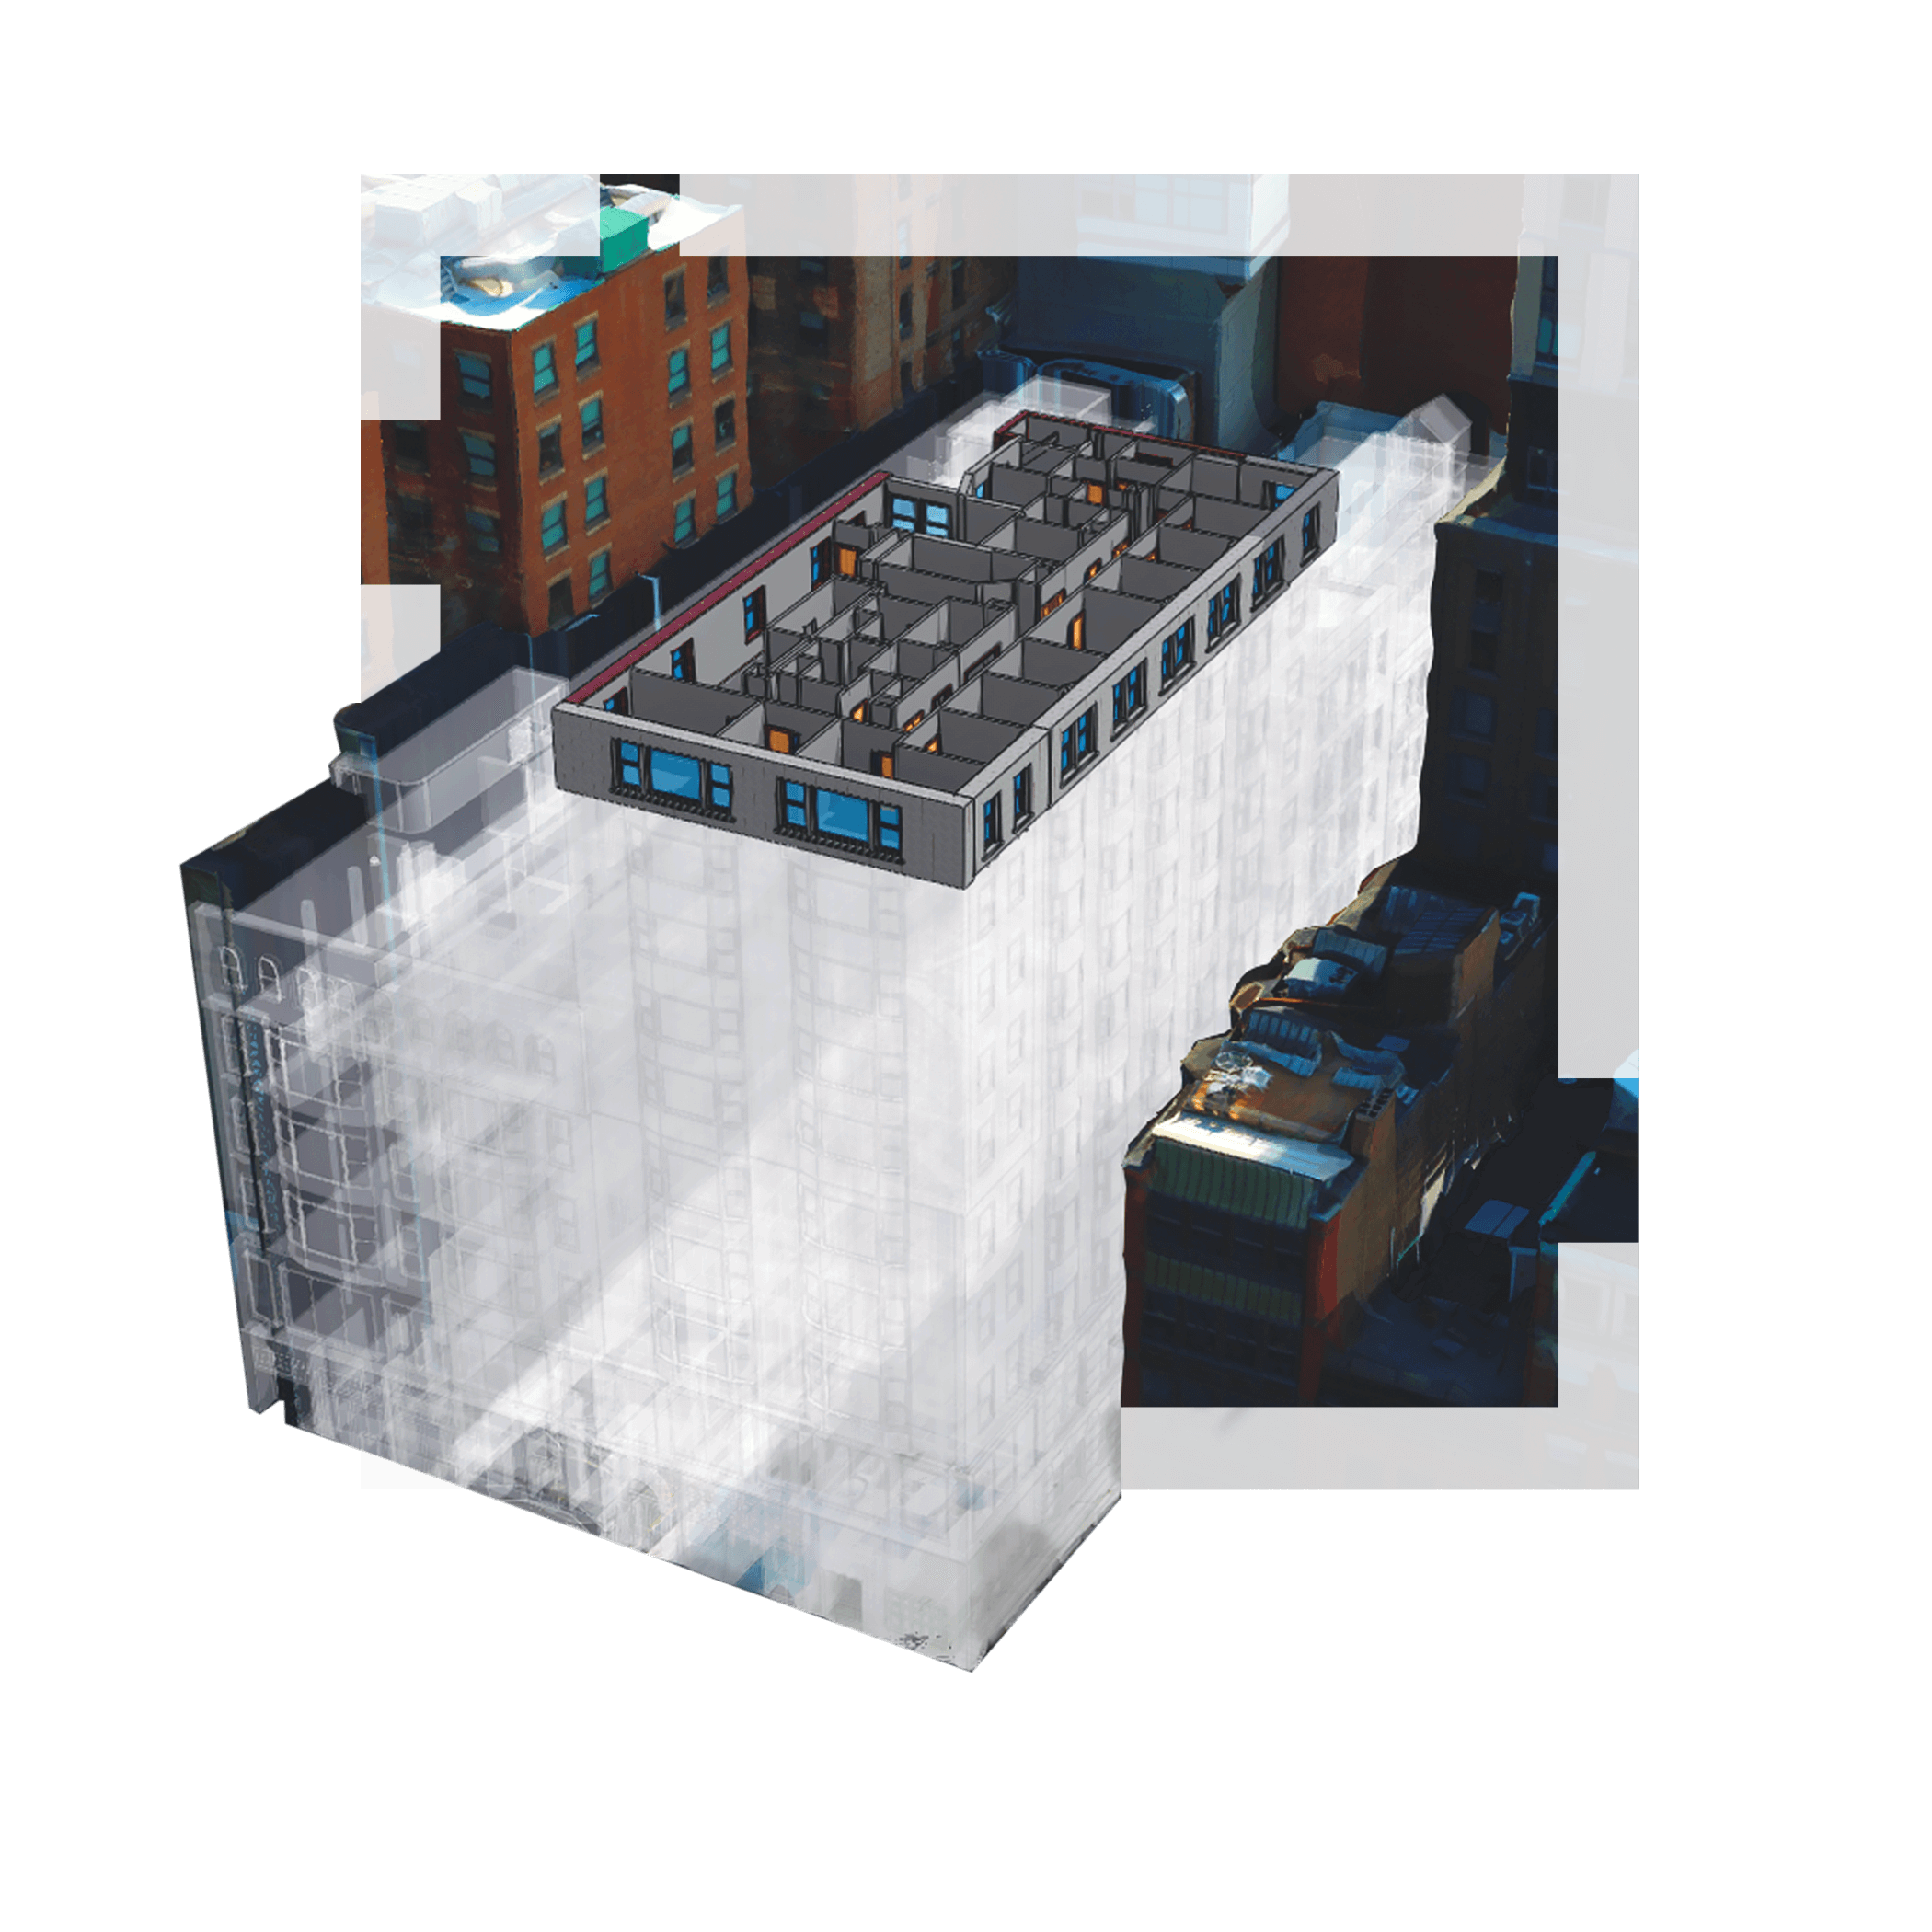 A 3D digital model of a multistory building on a city block